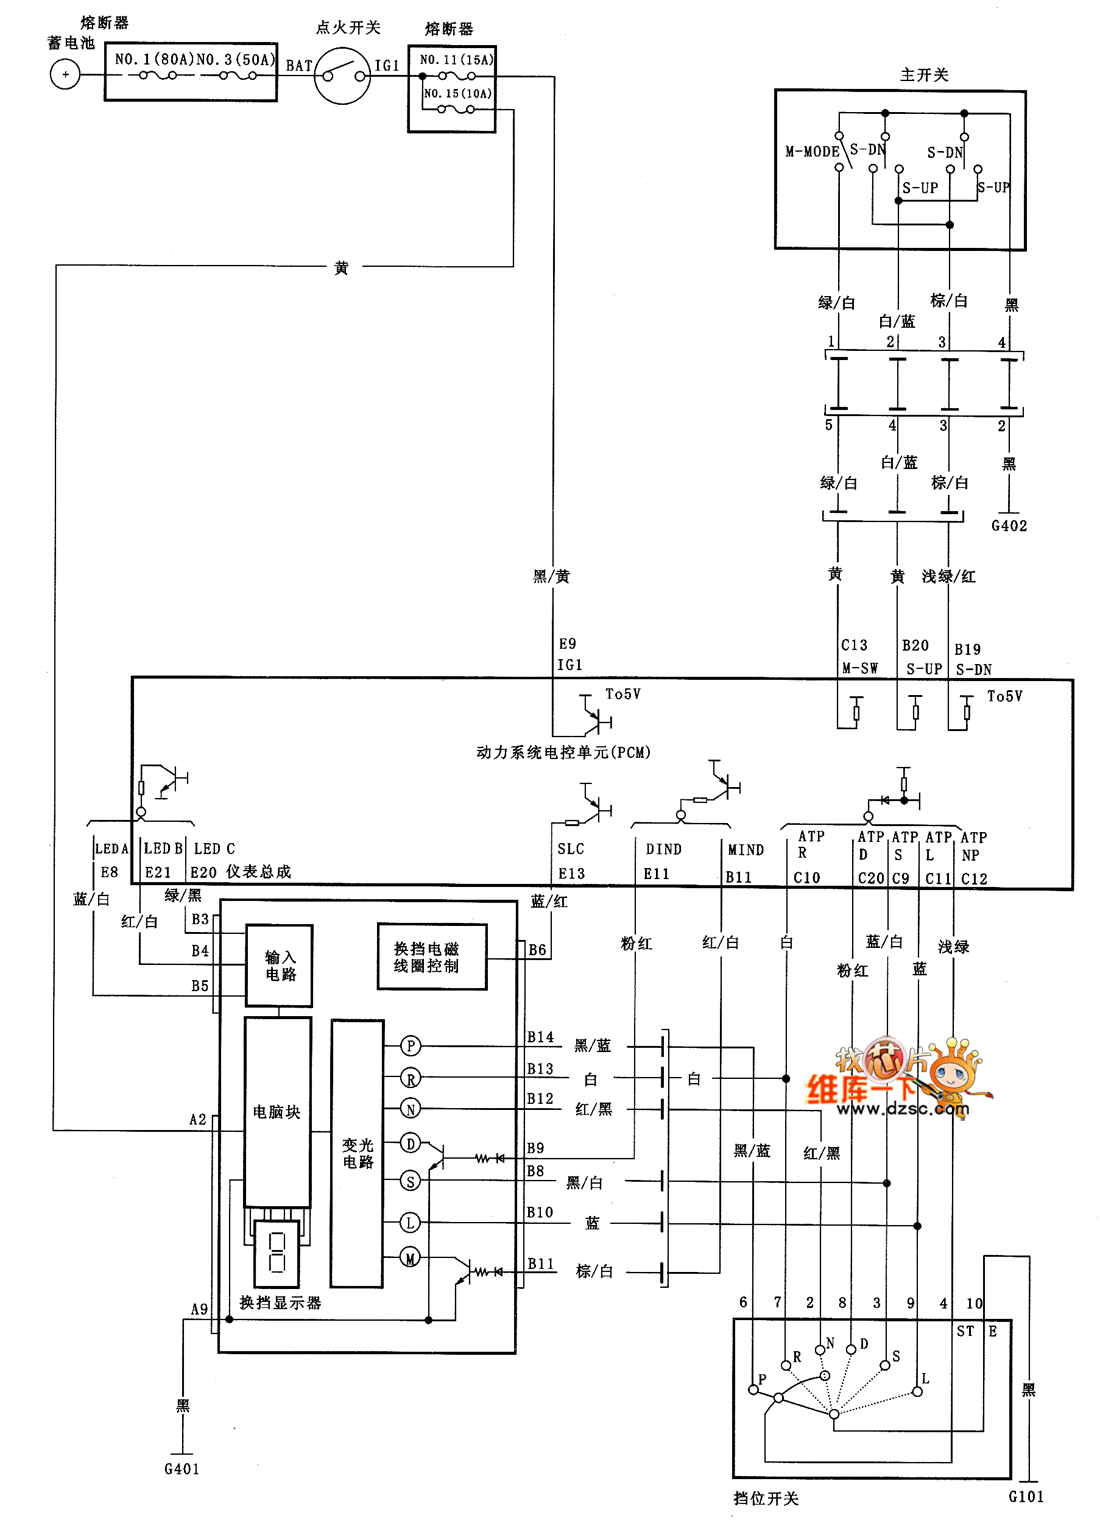 Guangzhou Fit Transmission A  T  Circuit Diagram